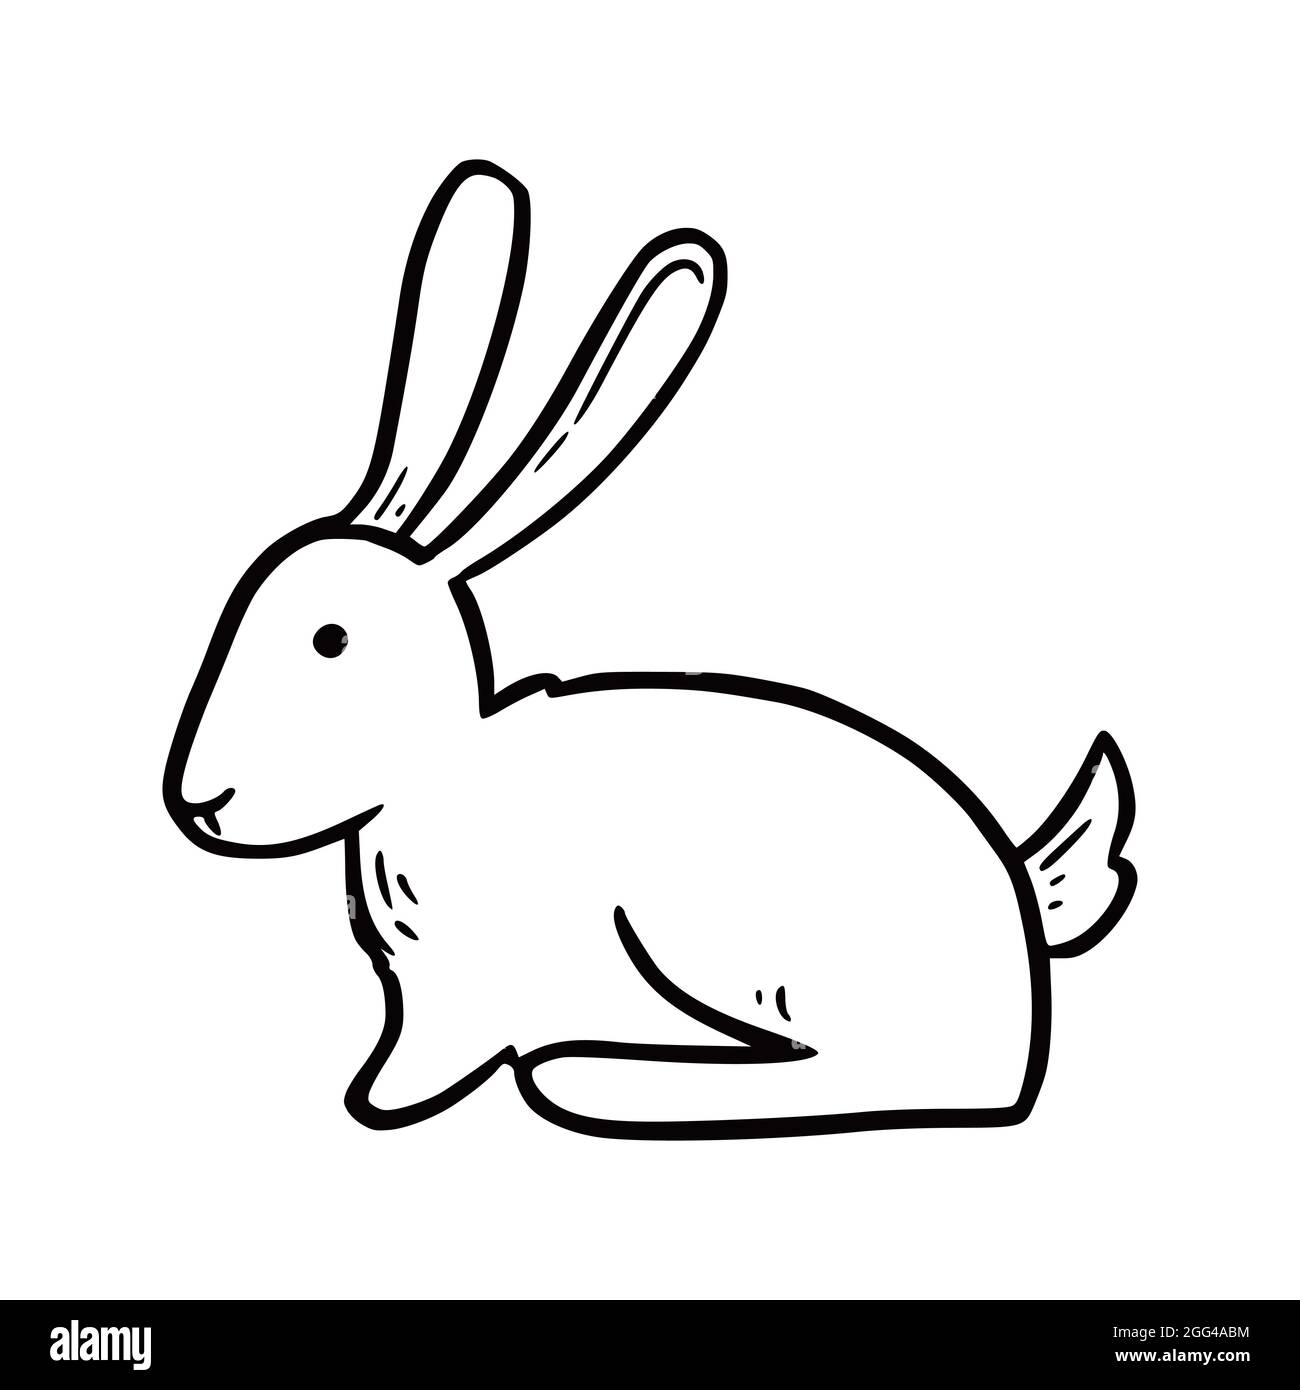 simple rabbit drawings